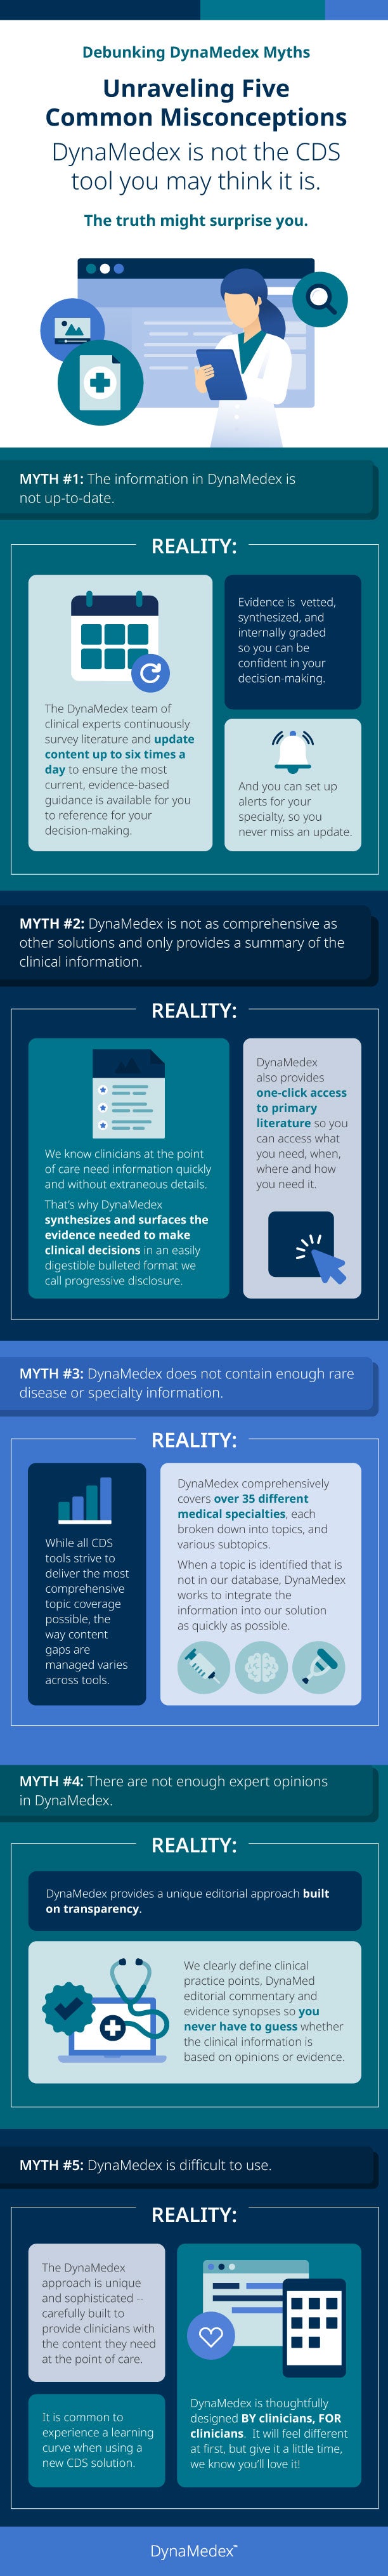 DynaMedex Five Myths Infographic    